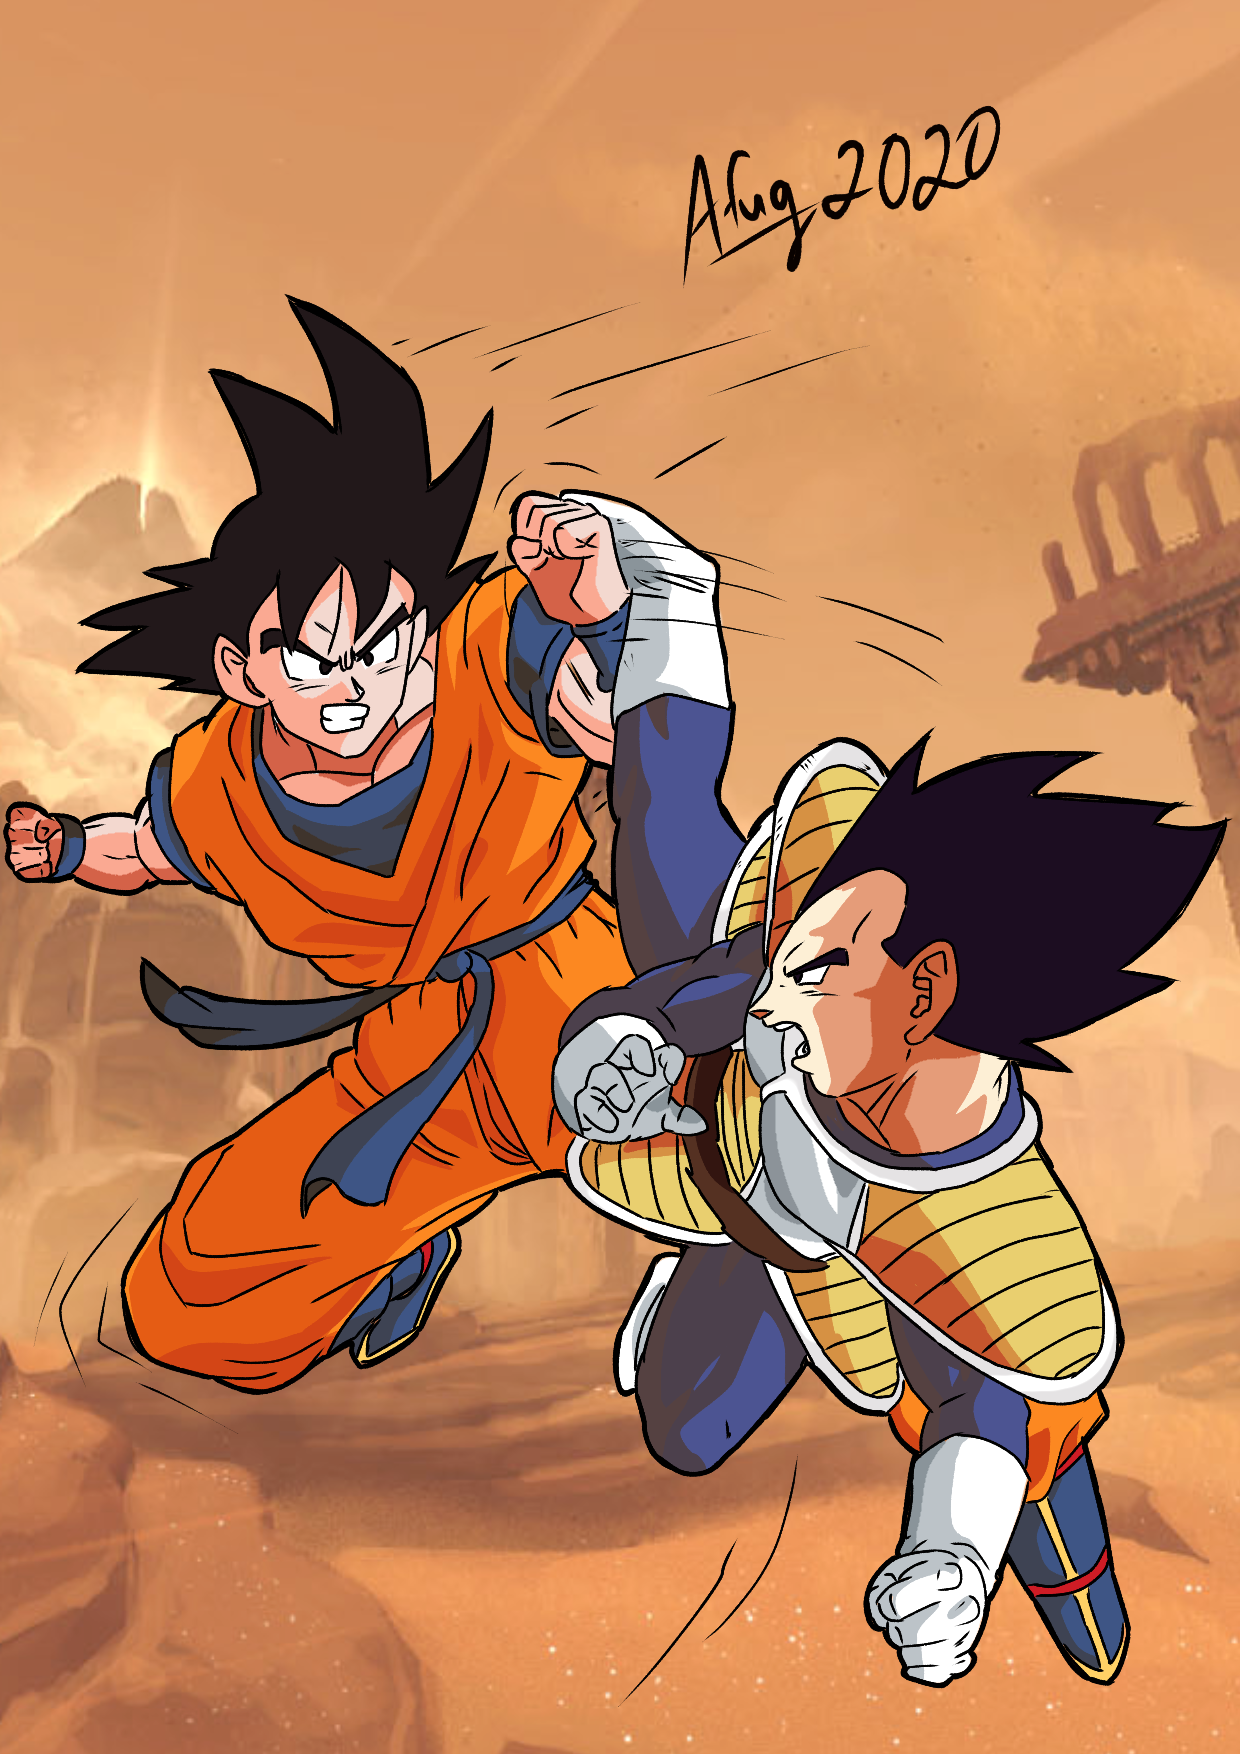 Goku,Vegeta (DBsuper manga 84) by diegoku92 on DeviantArt